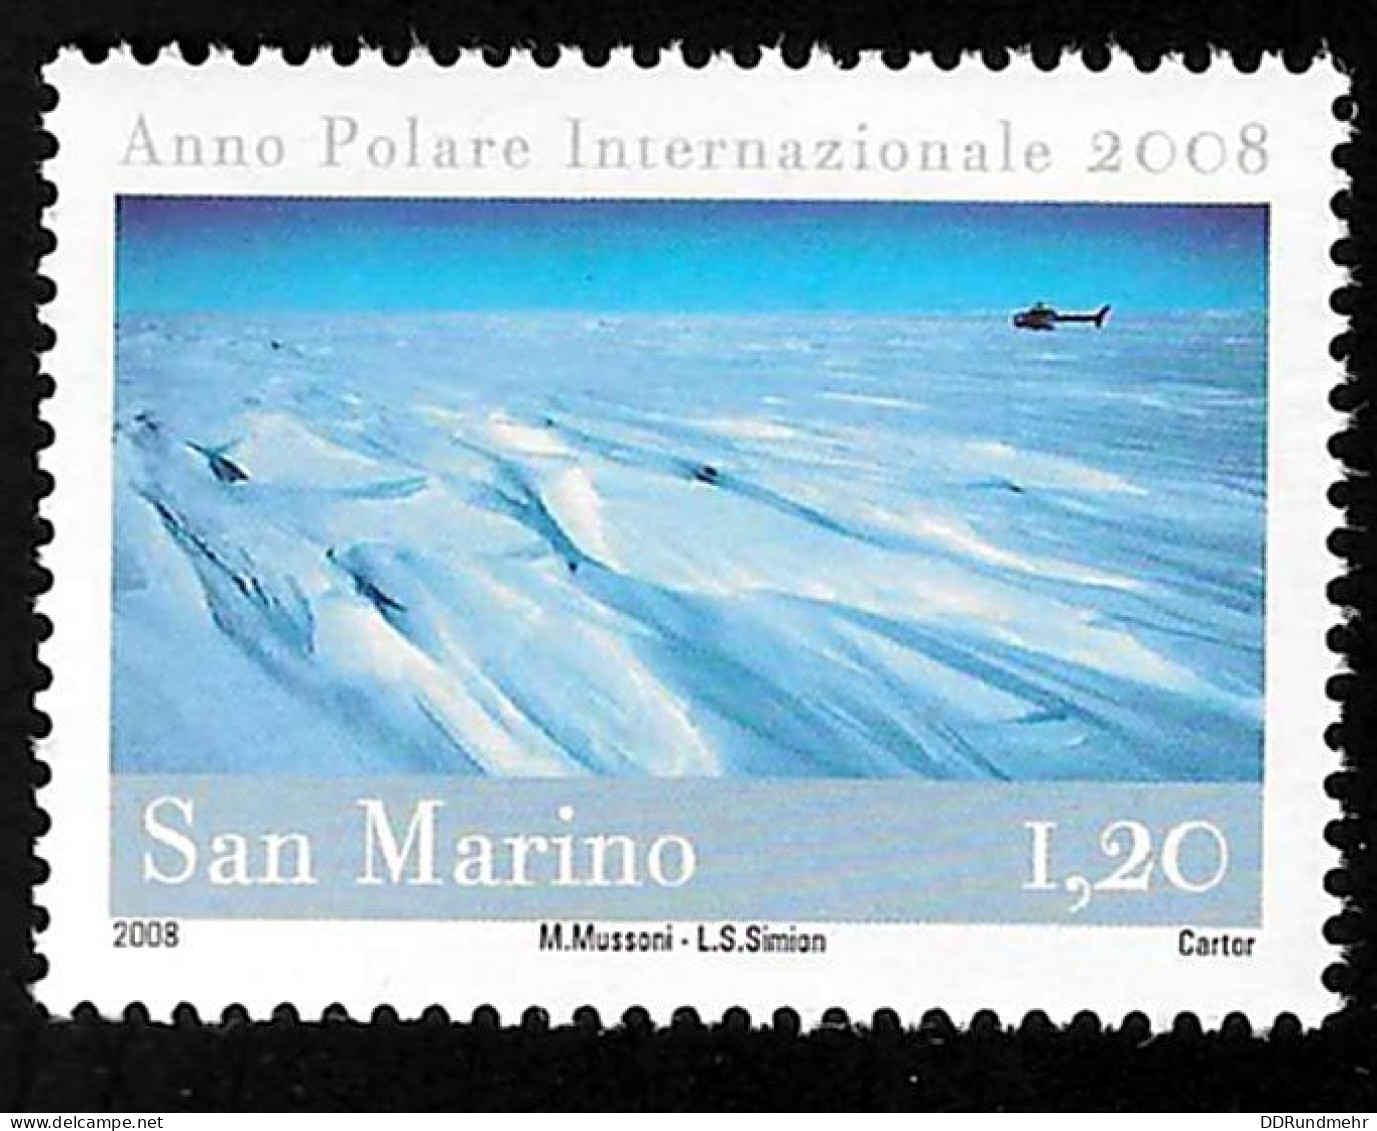 2008 Polar Year  Michel SM 2360 Stamp Number SM 1770 Yvert Et Tellier SM 2153 Stanley Gibbons SM 2186 Xx MNH - Neufs